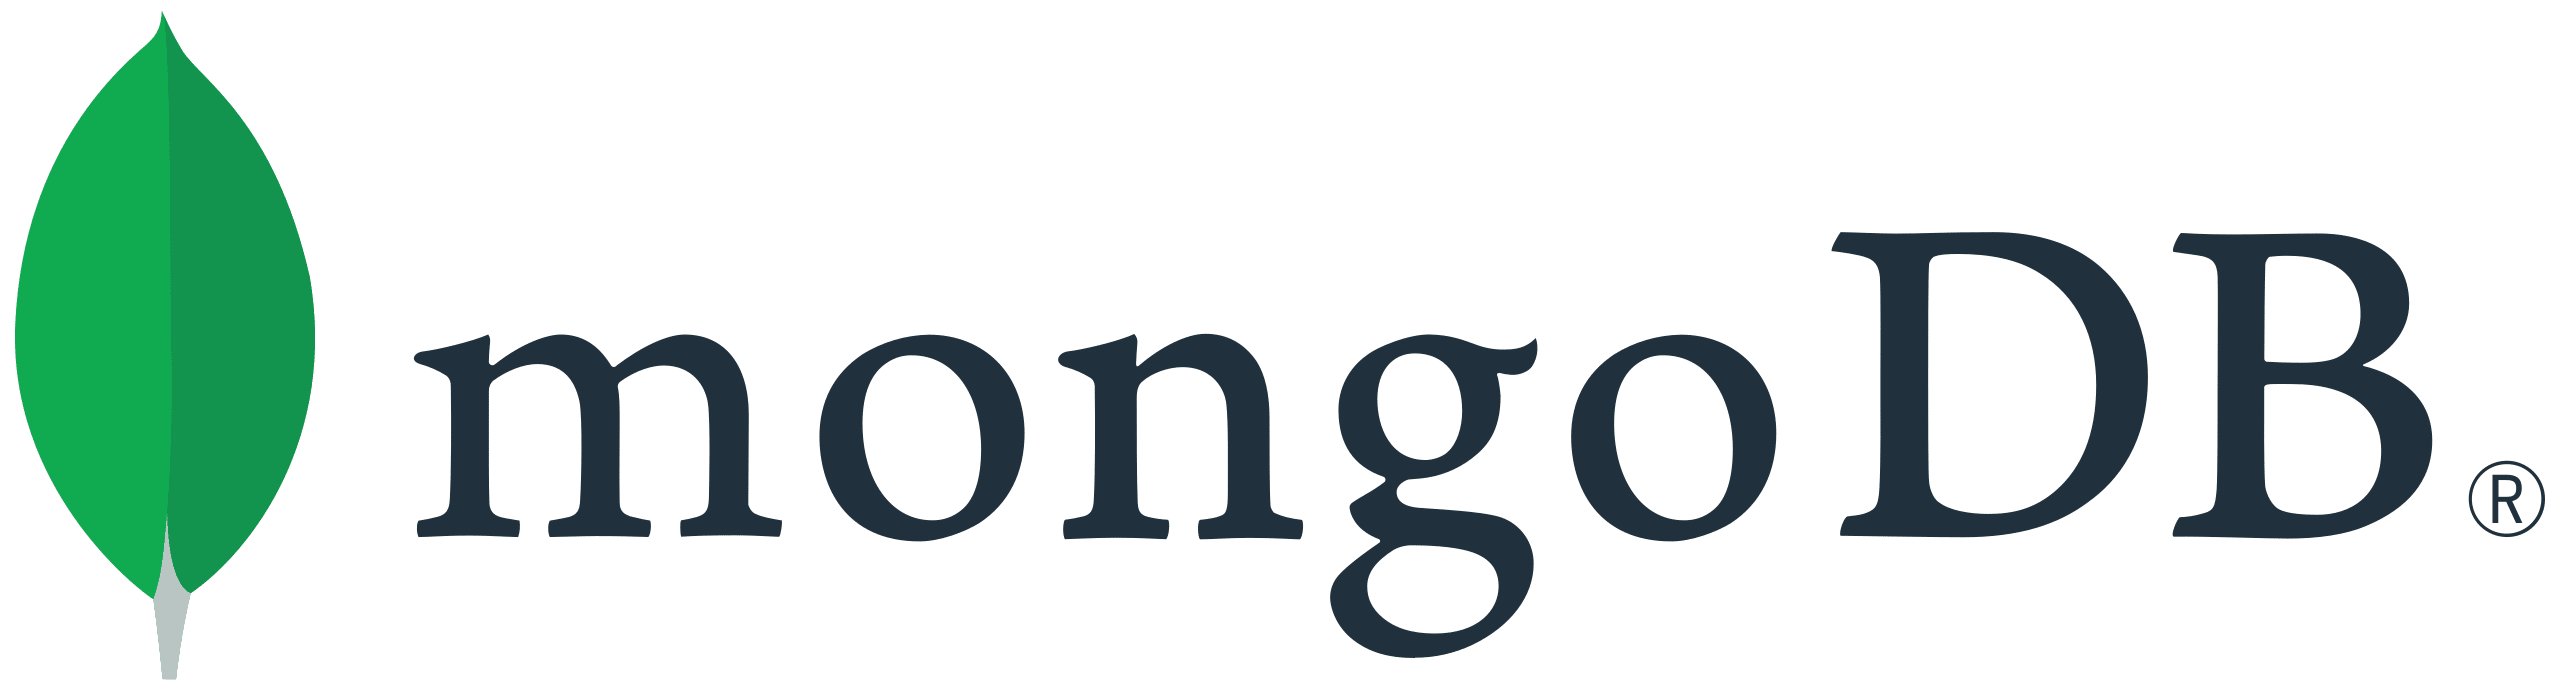 Integrations - MongoDB Logo.svg - Rebid.co